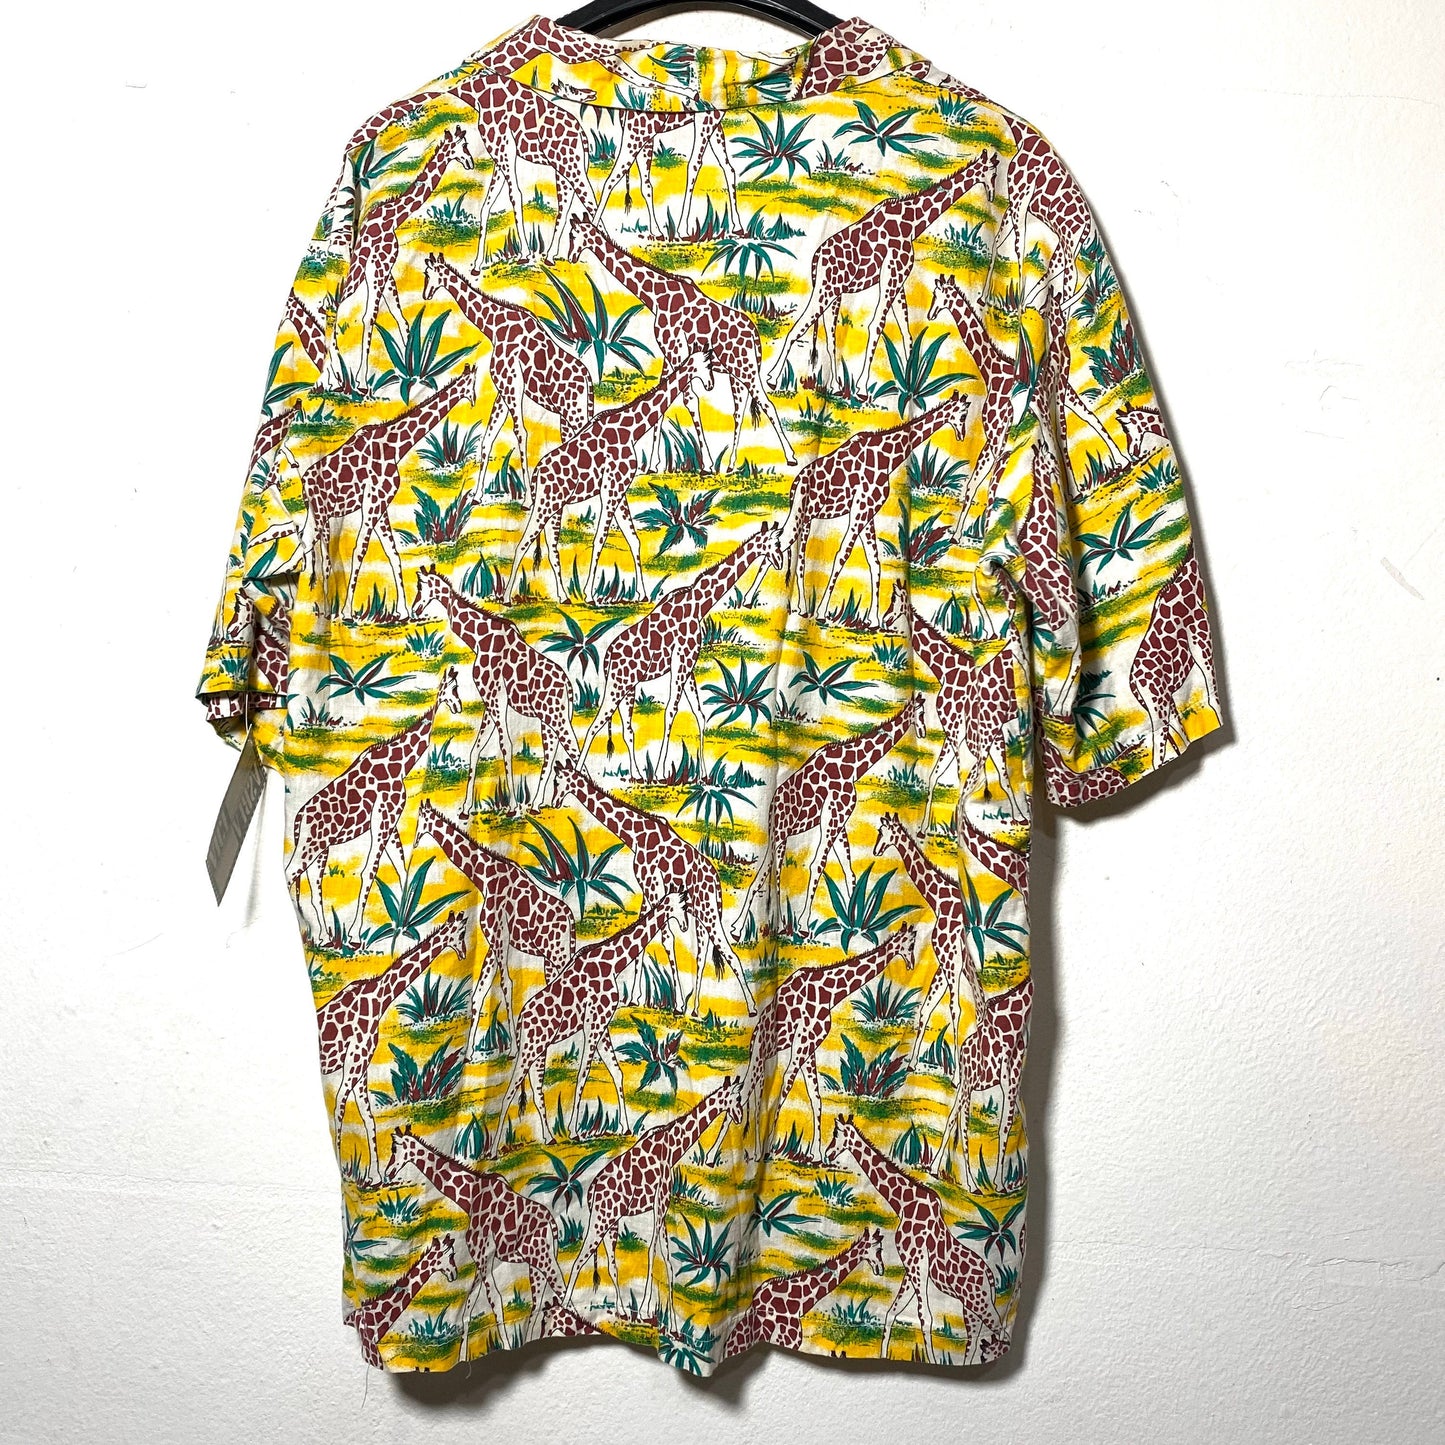 Max Rob safari-savana giraffes print yellow aloha shirt, pure cotton, 80s mint condition